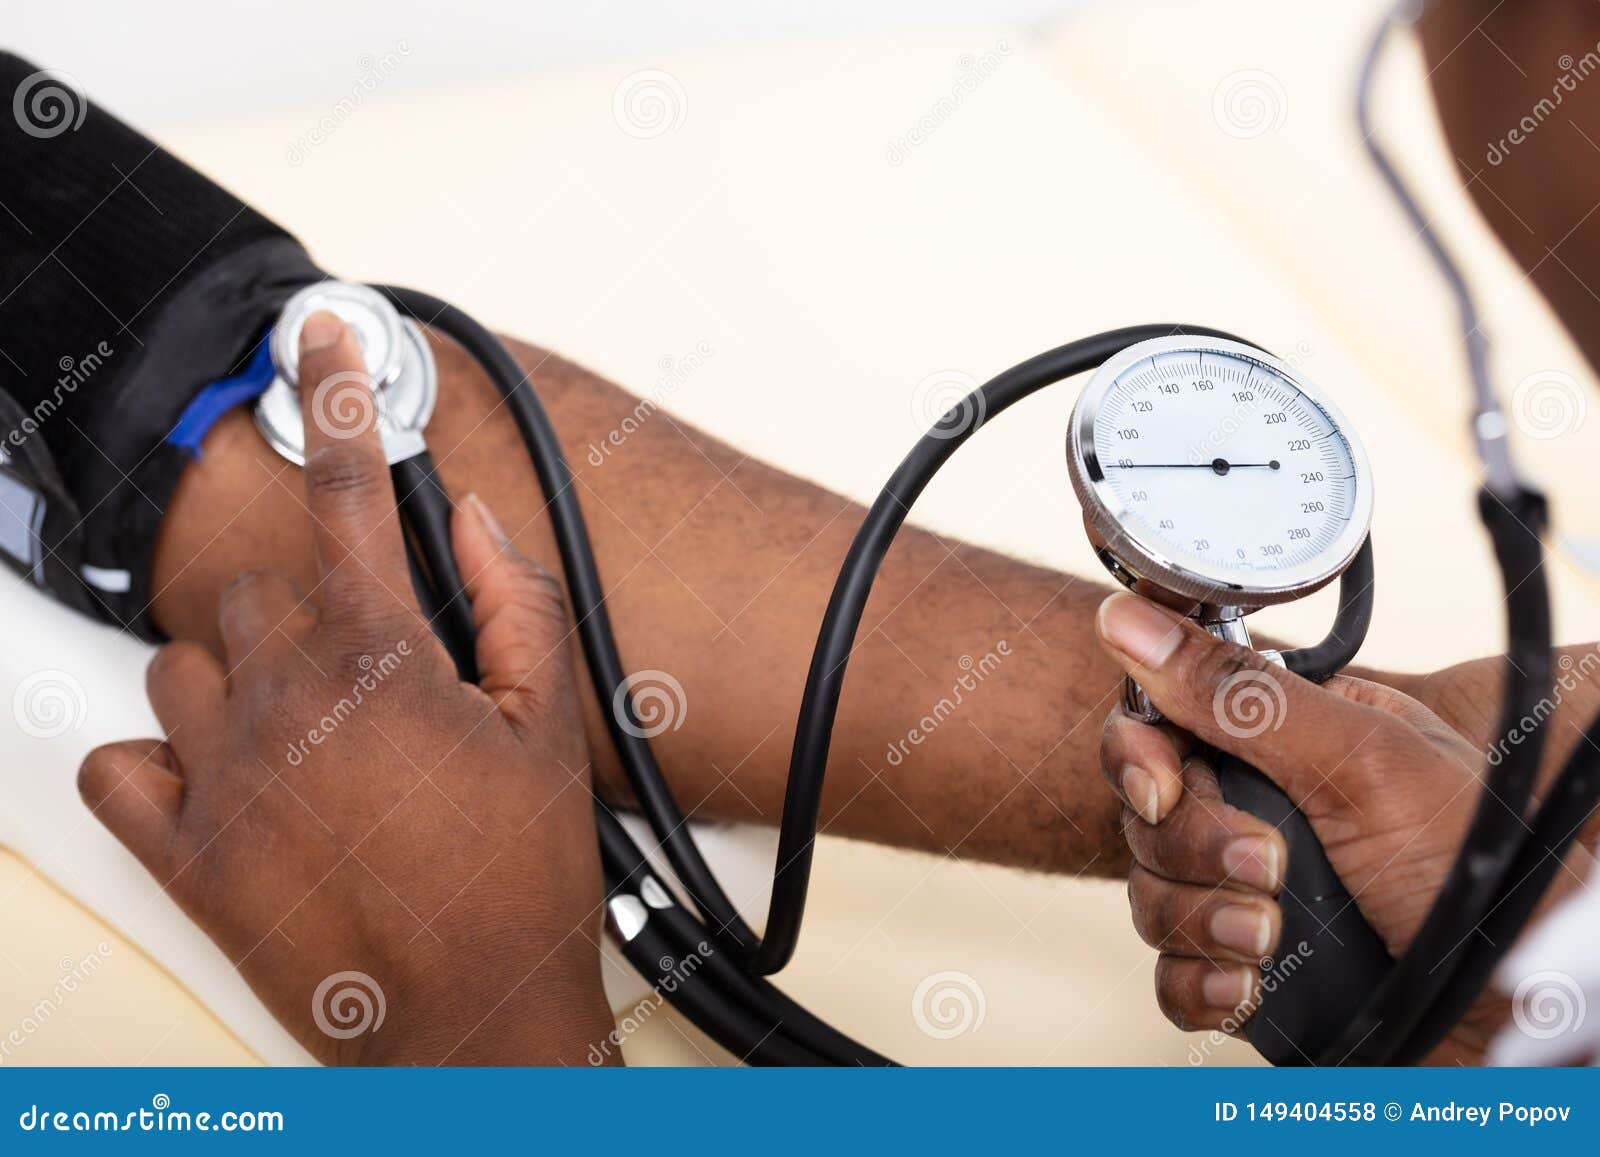 doctor measuring blood pressure of patient